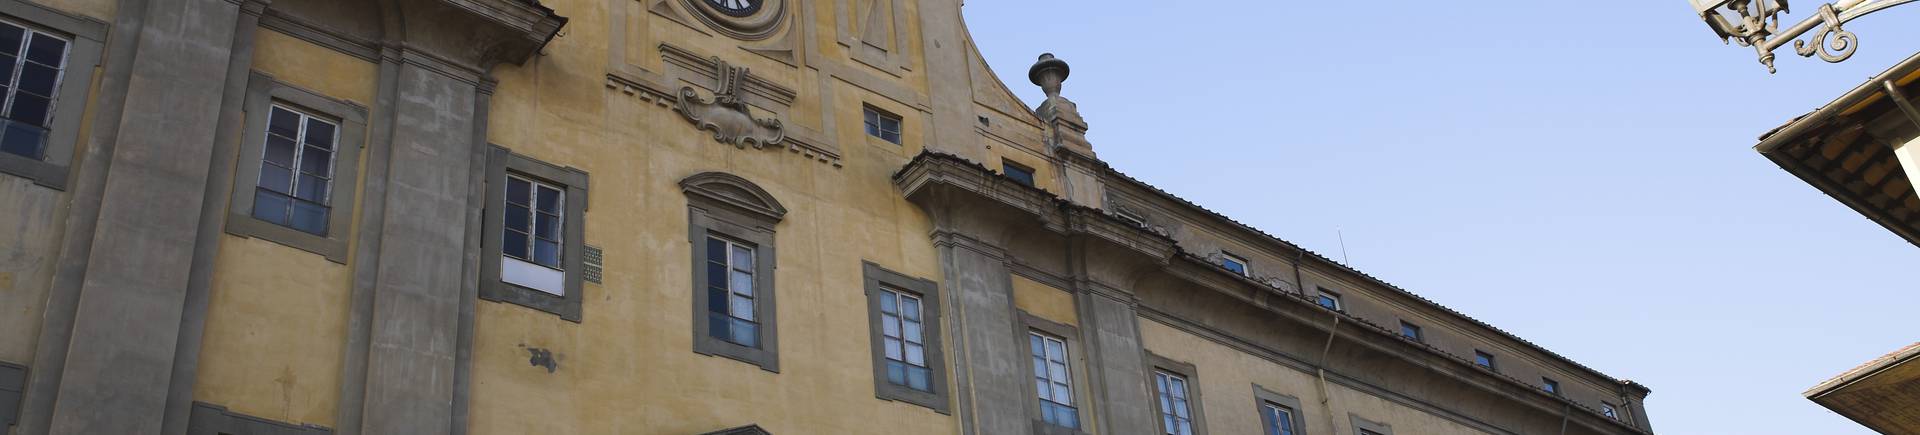 Collegio Cicognini, facade